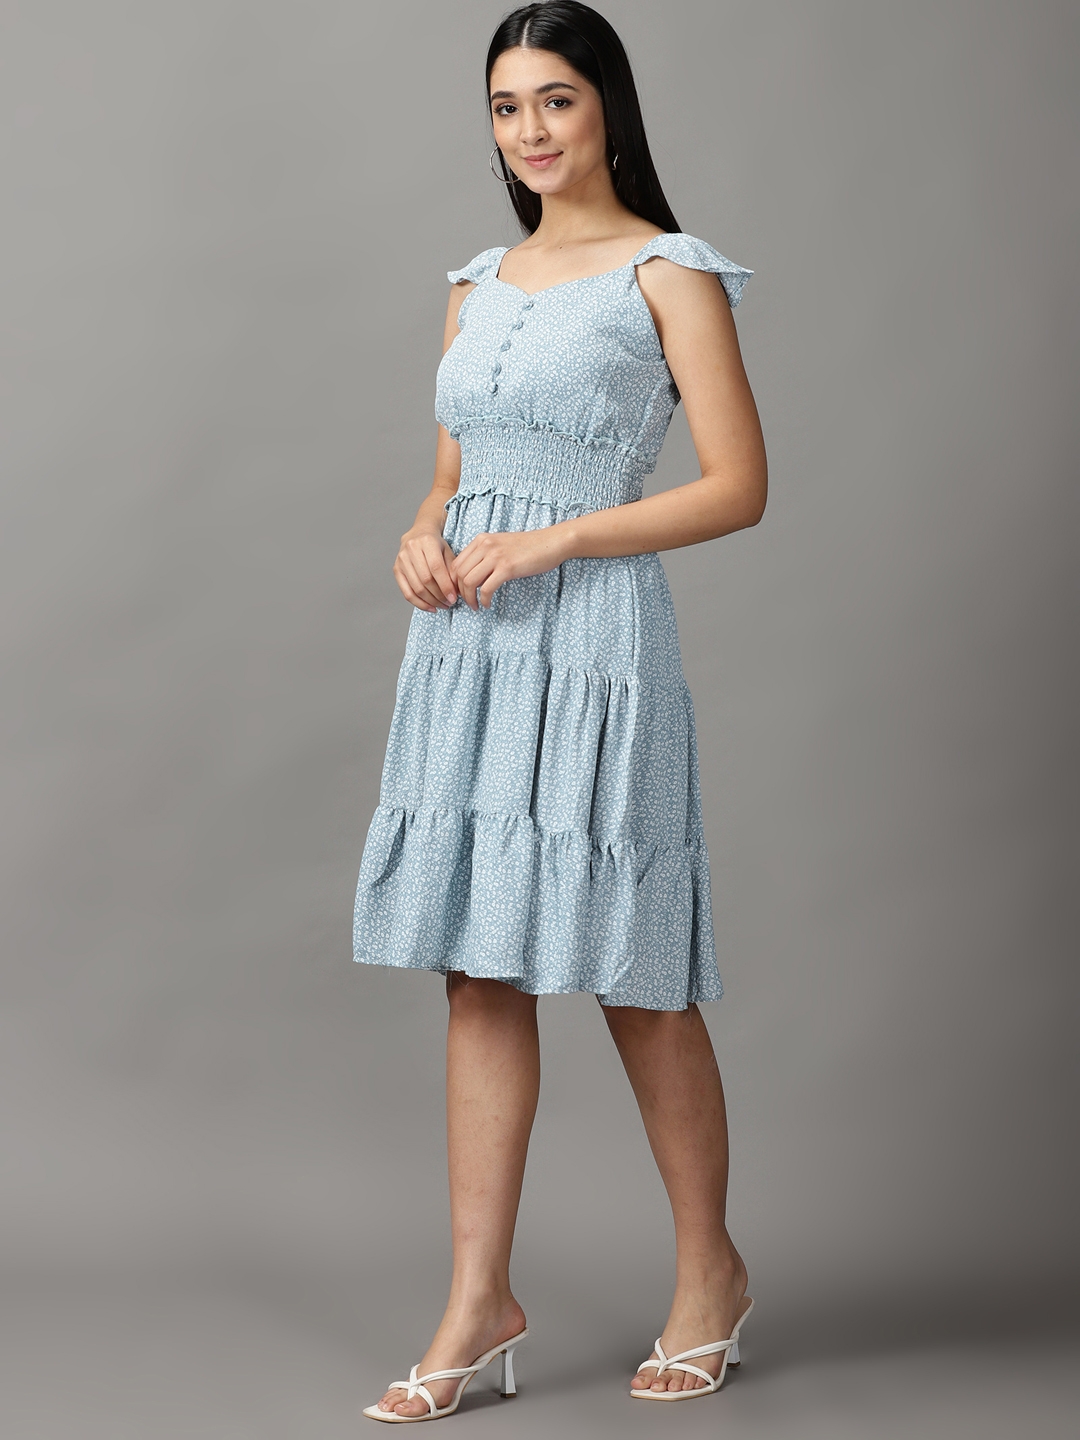 Showoff | SHOWOFF Women Blue Printed Shoulder Straps Sleeveless Above Knee Fit and Flare Dress 2